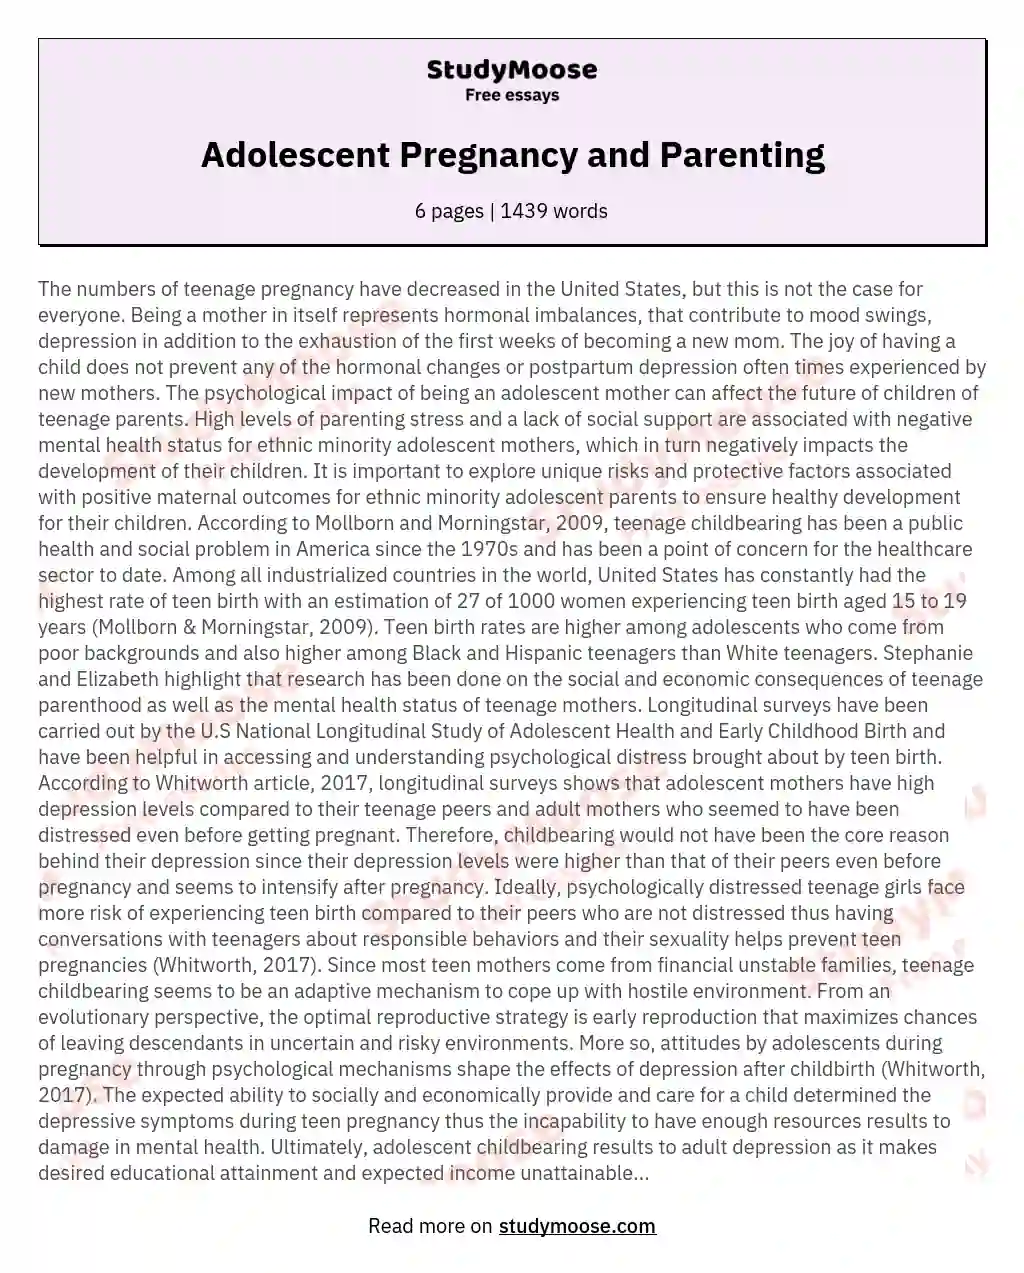 Adolescent Pregnancy and Parenting essay